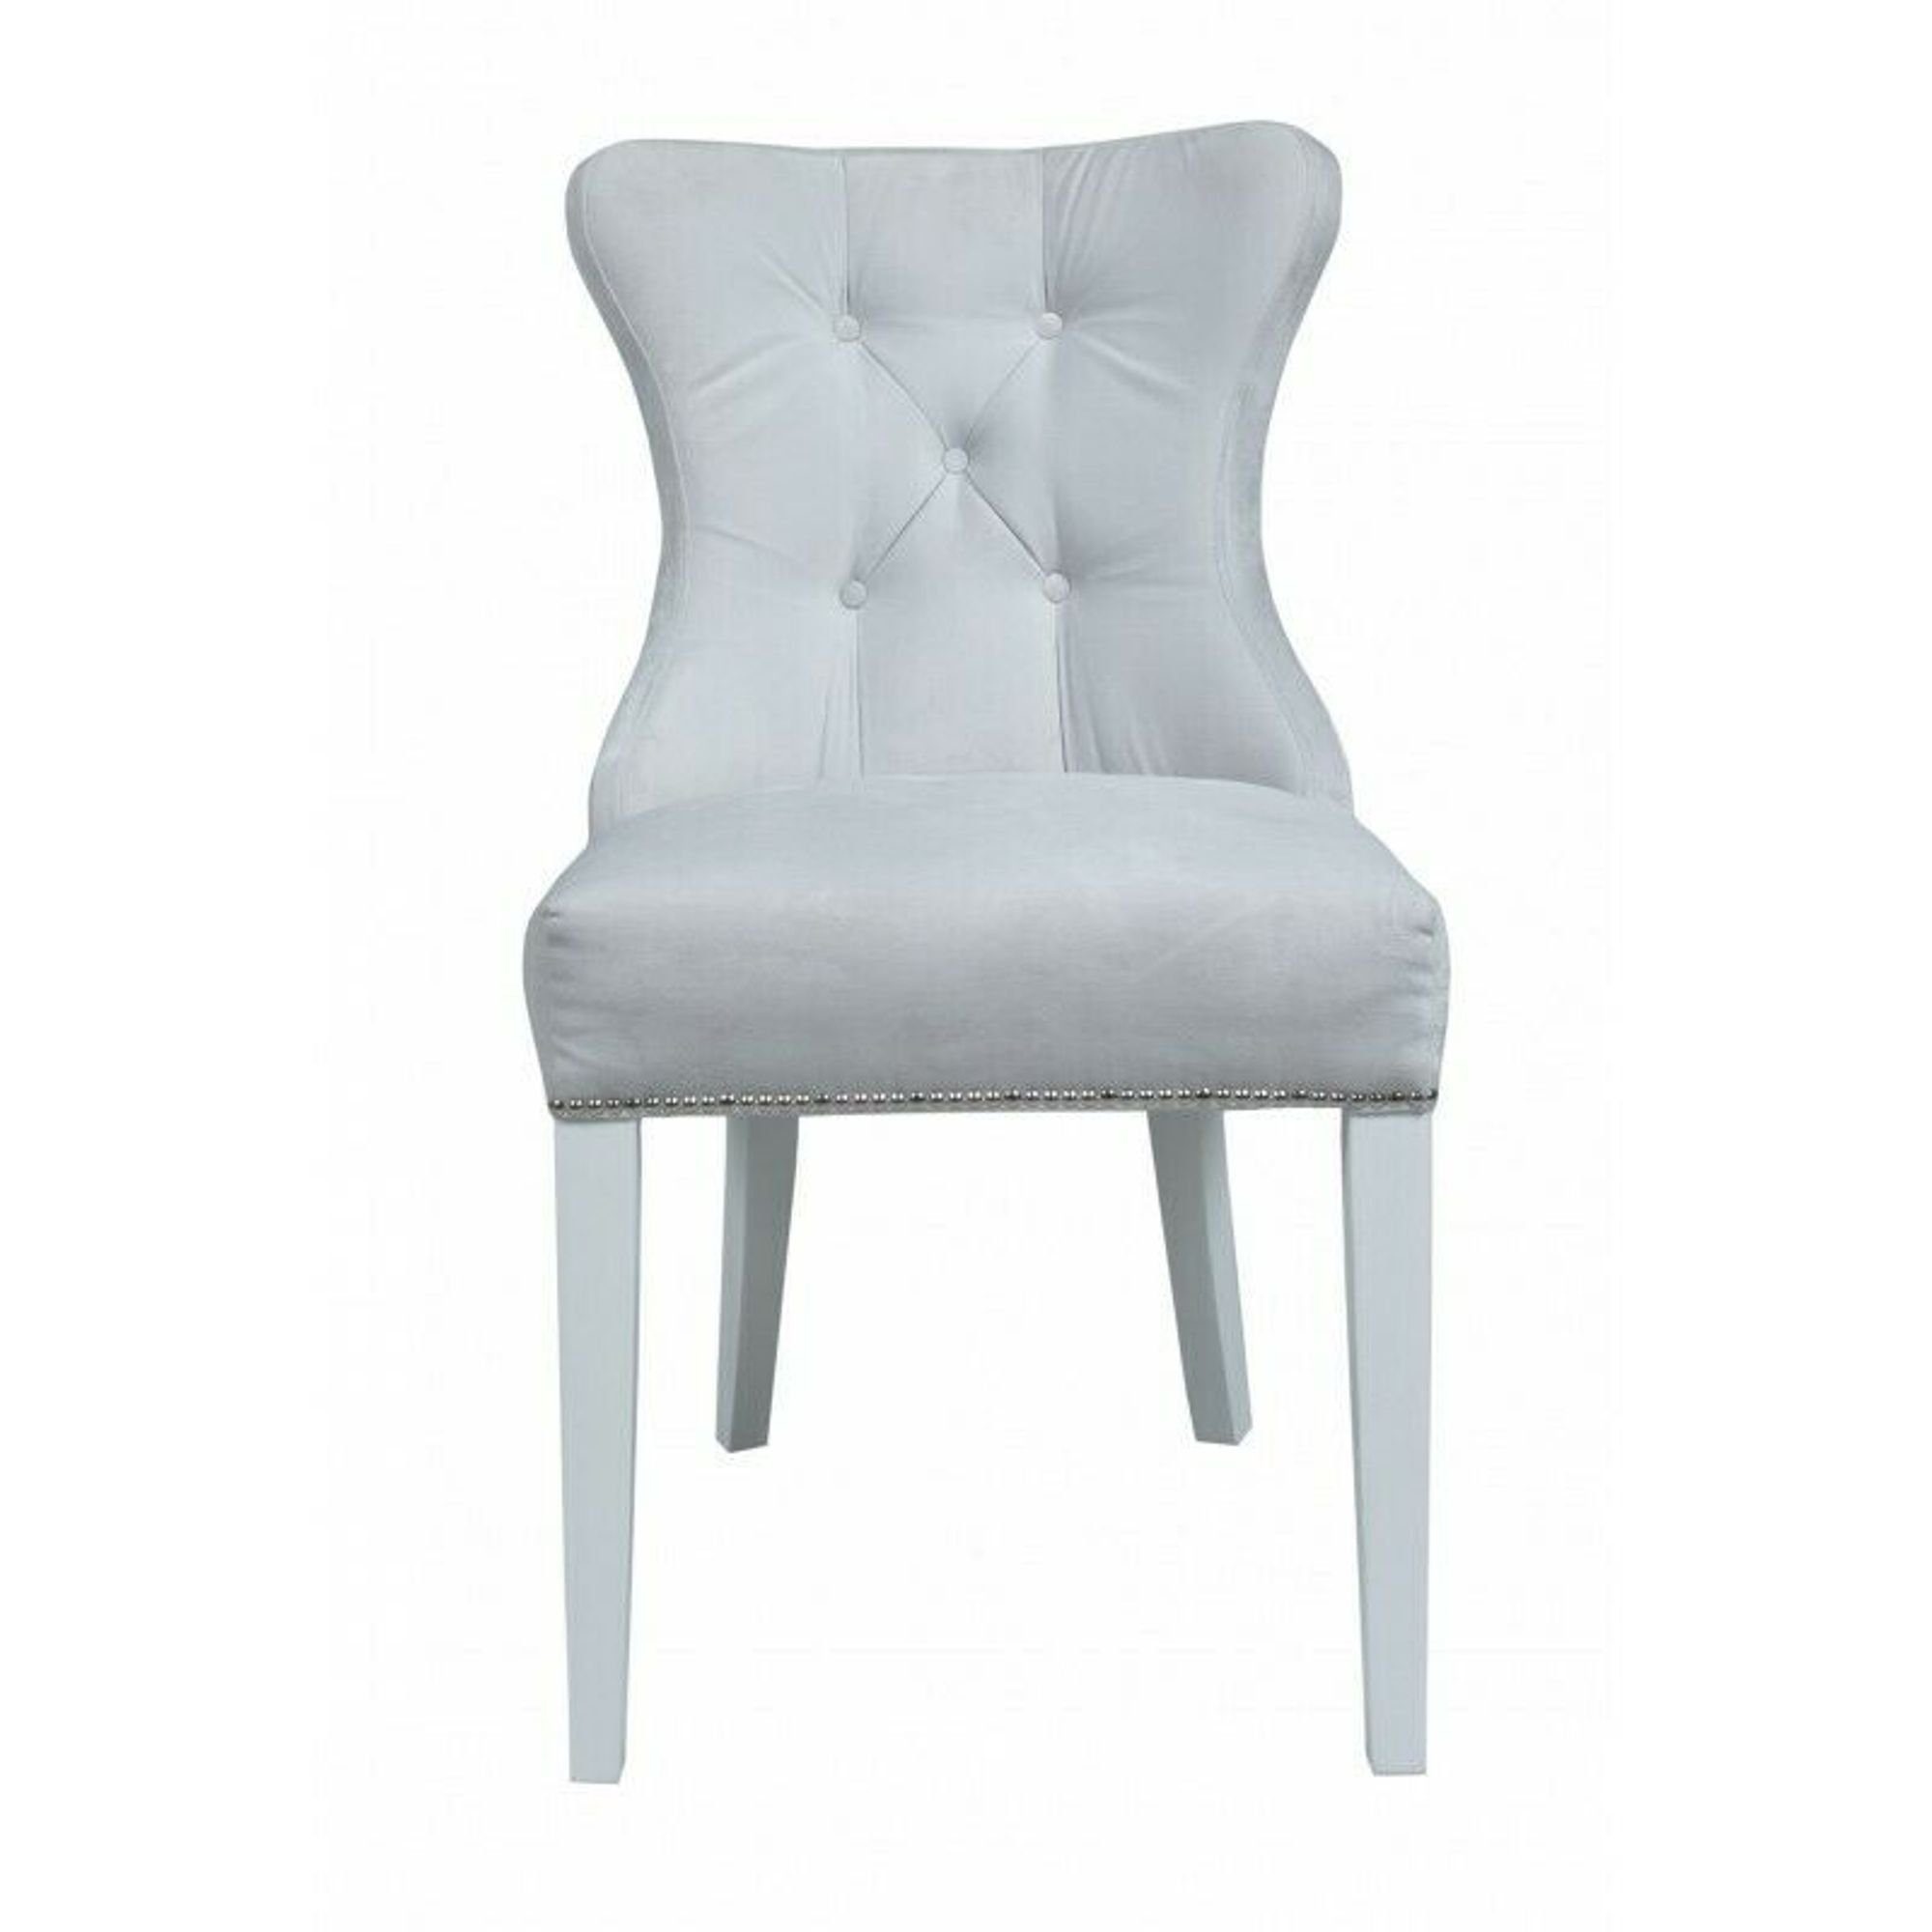 ist im Angebot! JVmoebel Stuhl, Textil Stühle Gruppe Garnitur Set Hotel Chesterfield Polster 10x Stuhl Design